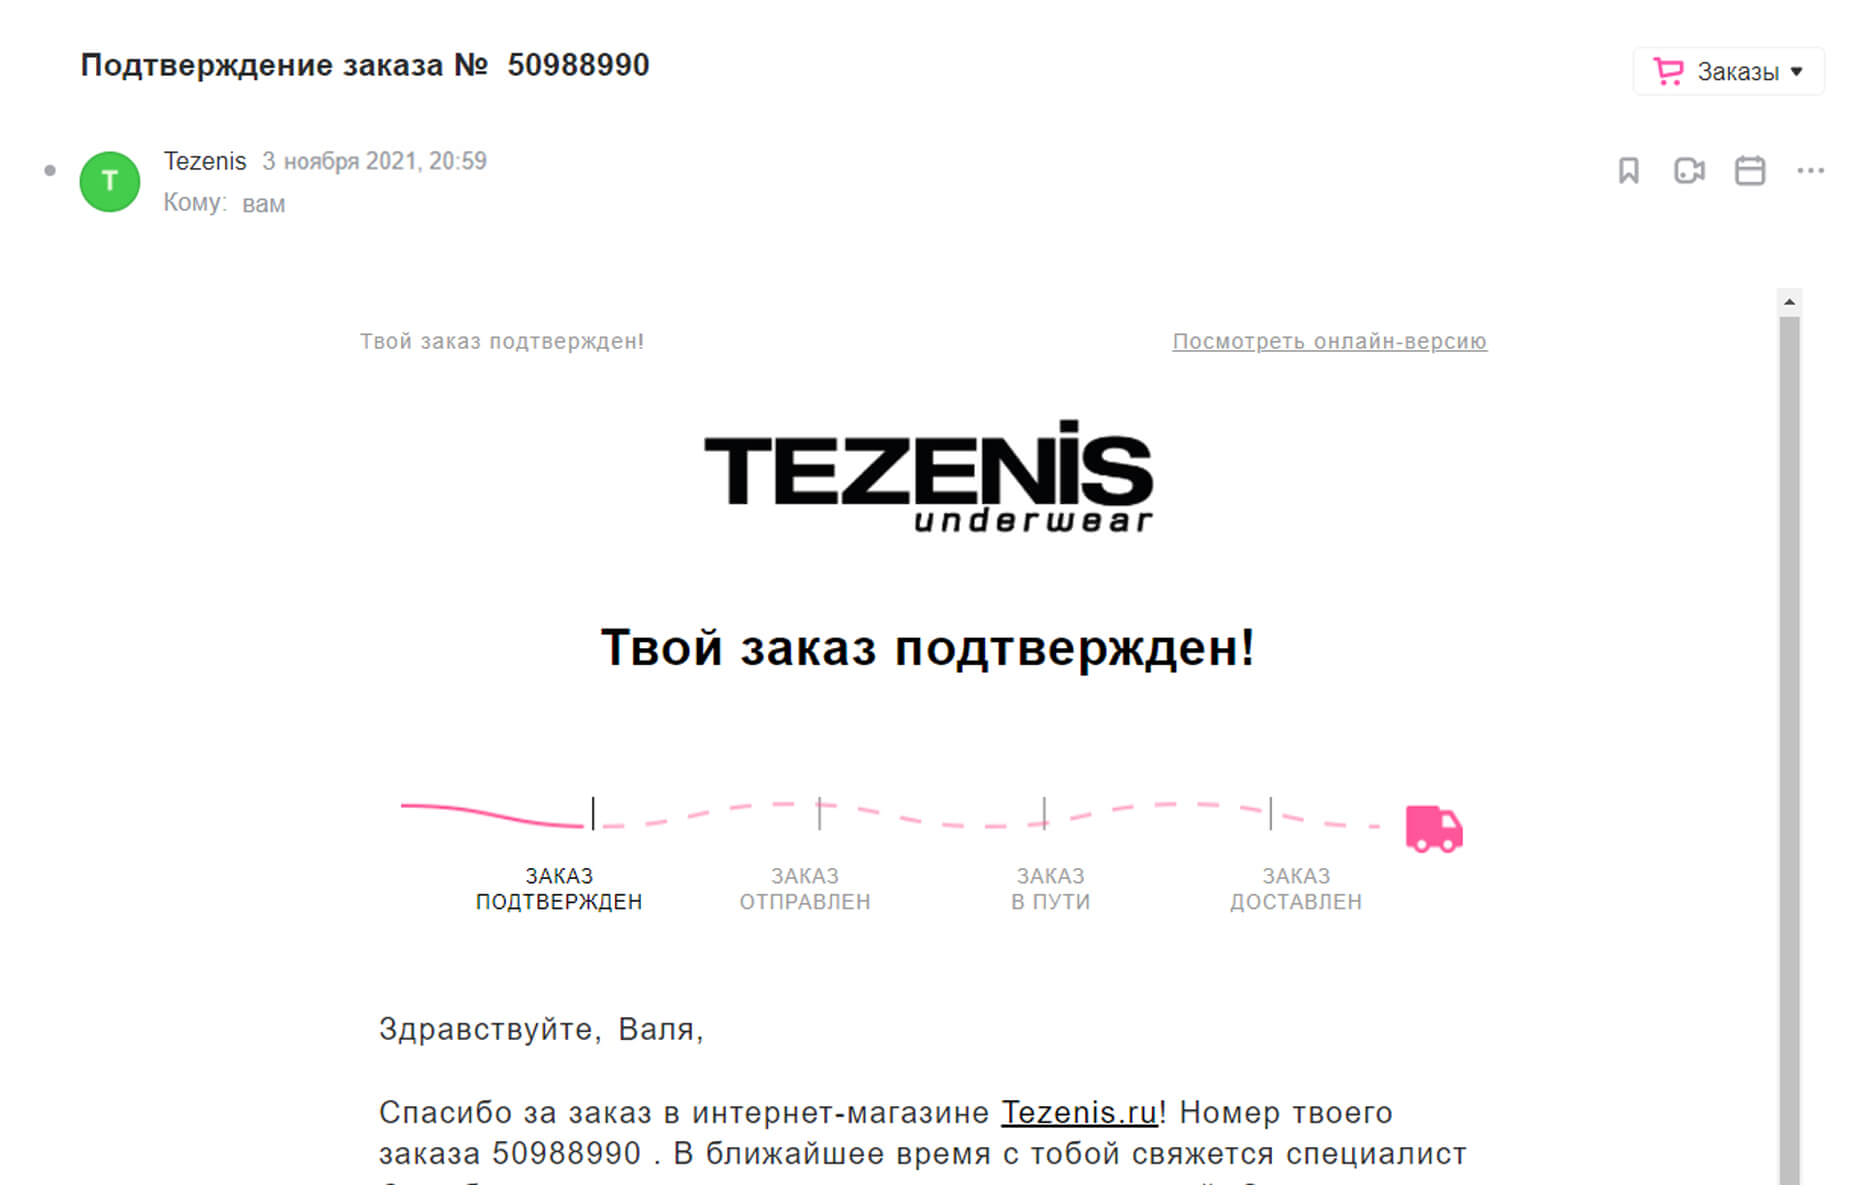 Пример транзакционного письма TEZENIS